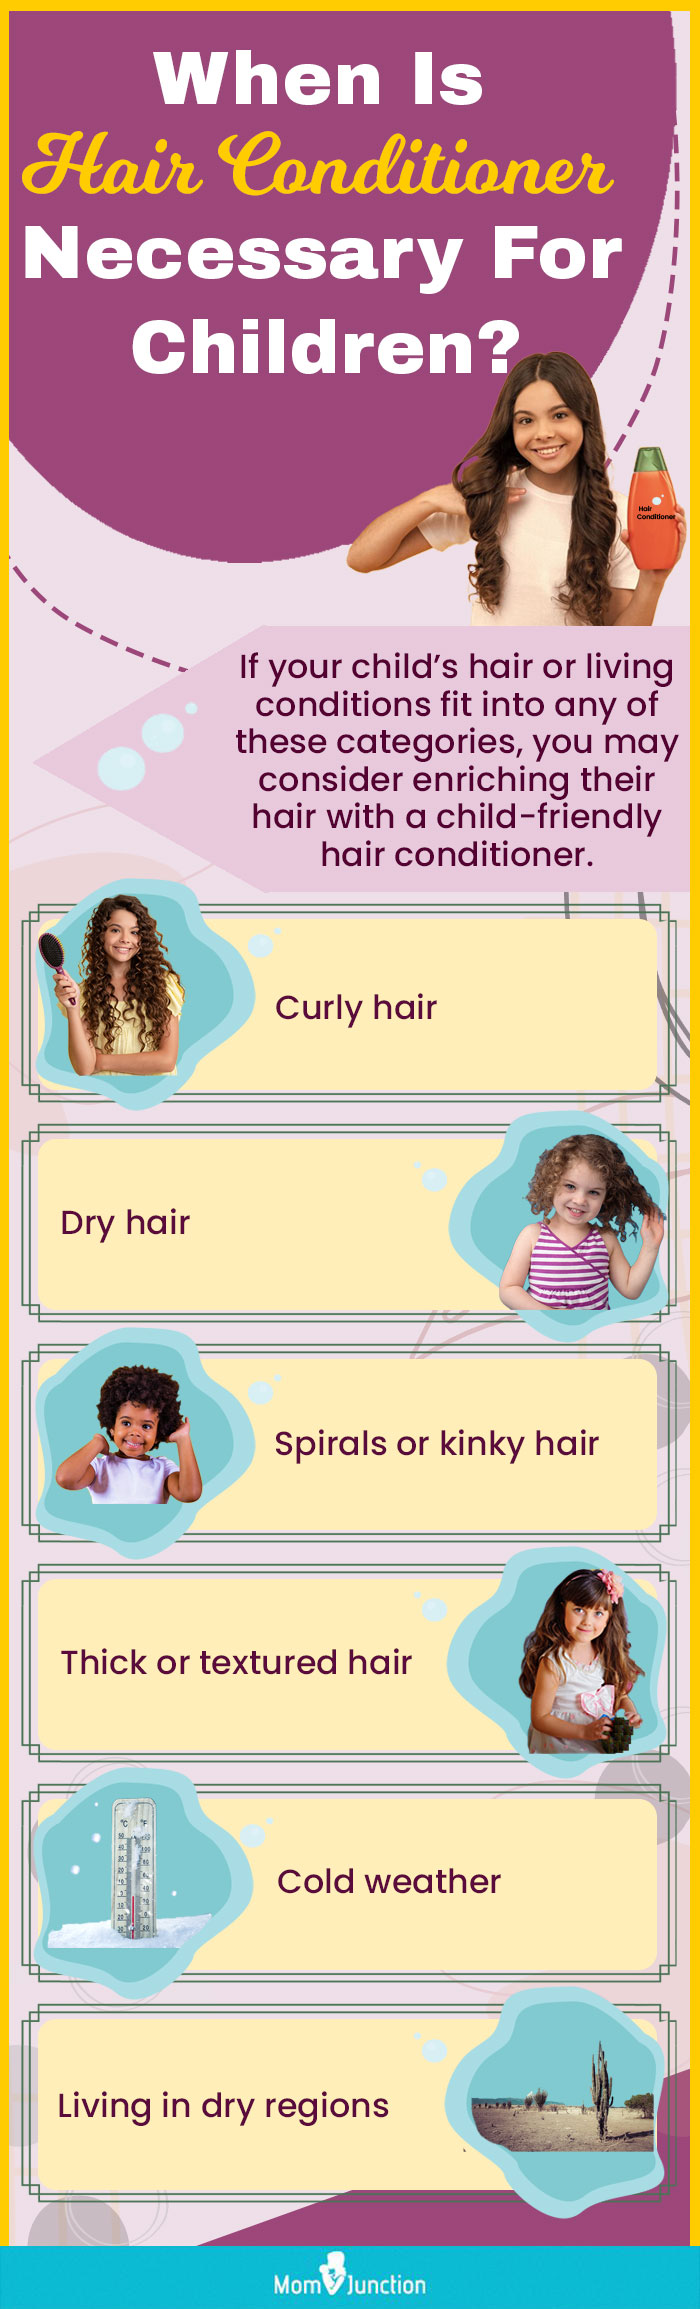 When Is Hair Conditioner Necessary For Children